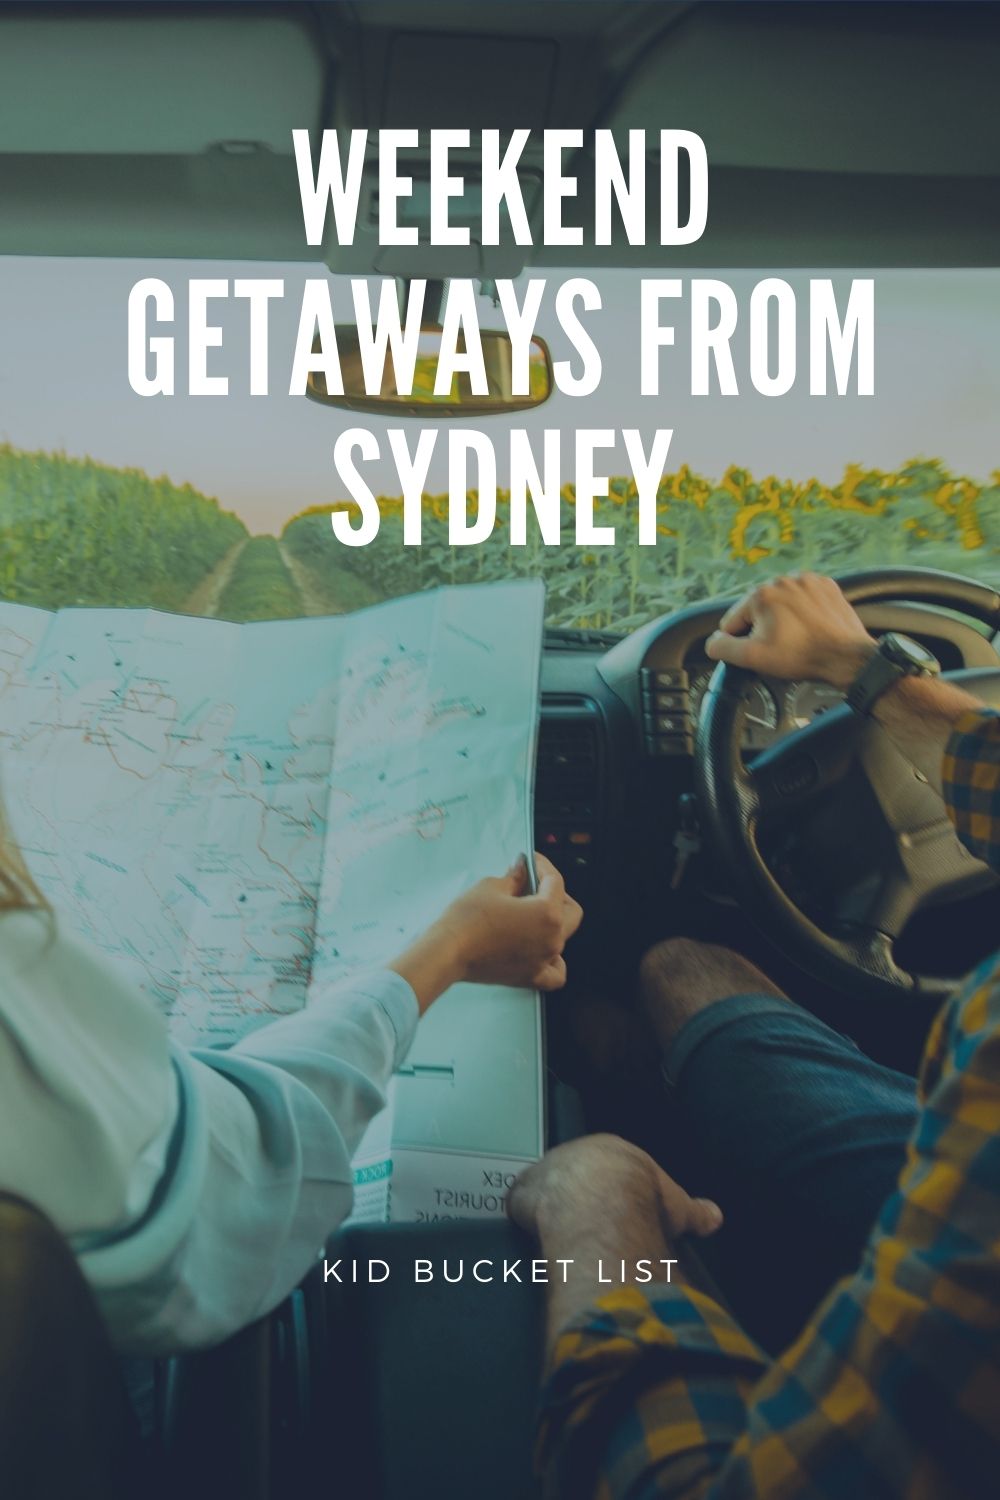 Weekend Getaways from Sydney with Kids